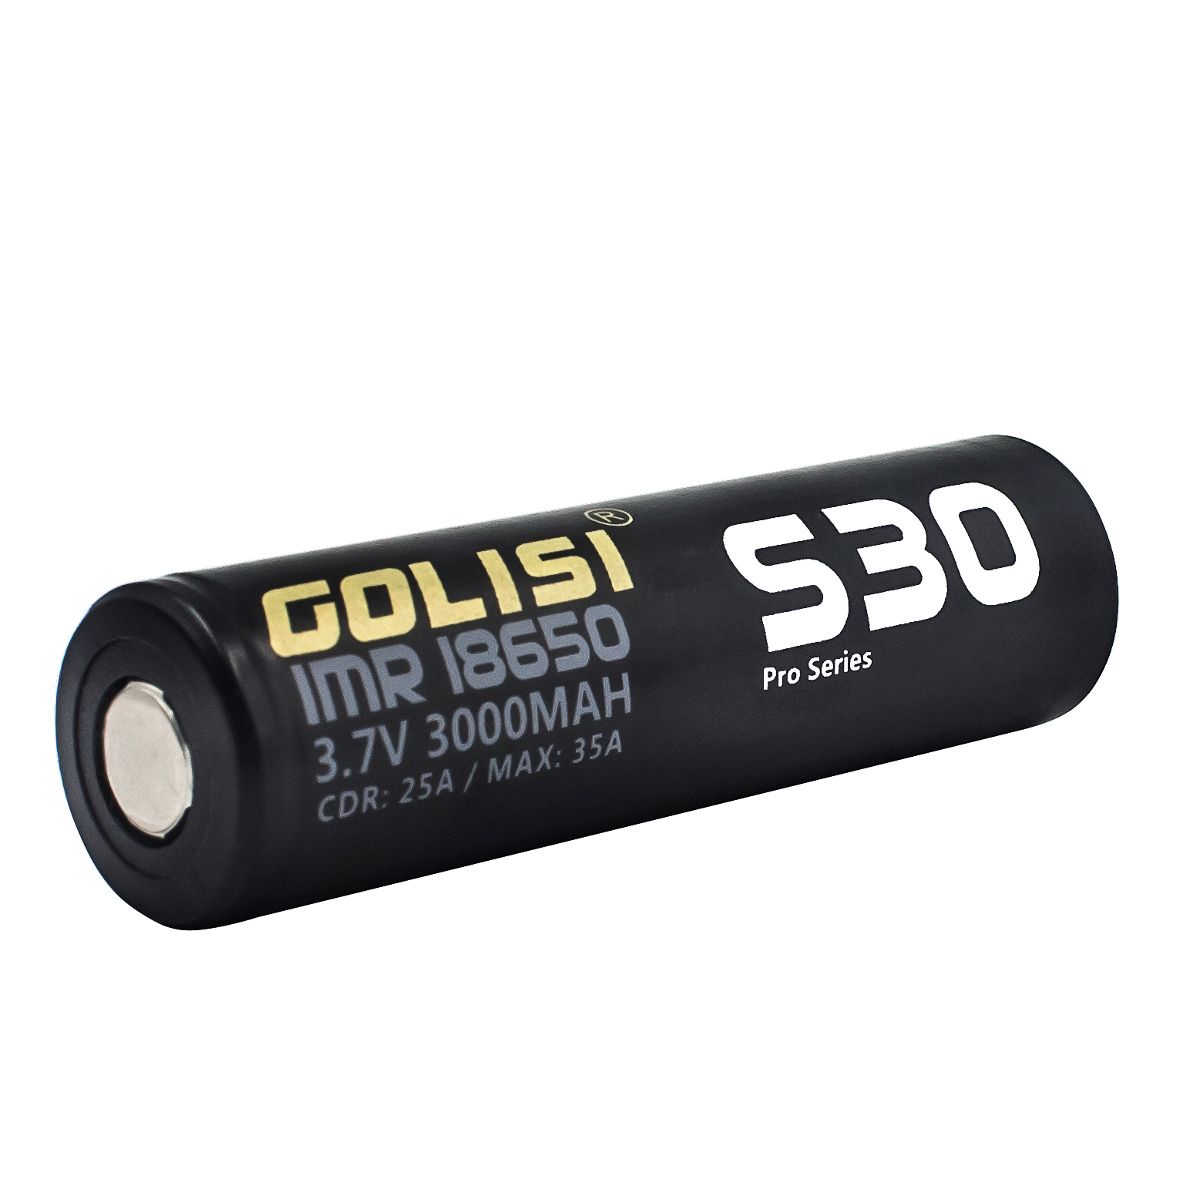 2Pcs-GOLISI-S30-18650-3000mAh-25A-High-Drain-IMR-18650-Powerful-Rechargeable-Battery-1398131